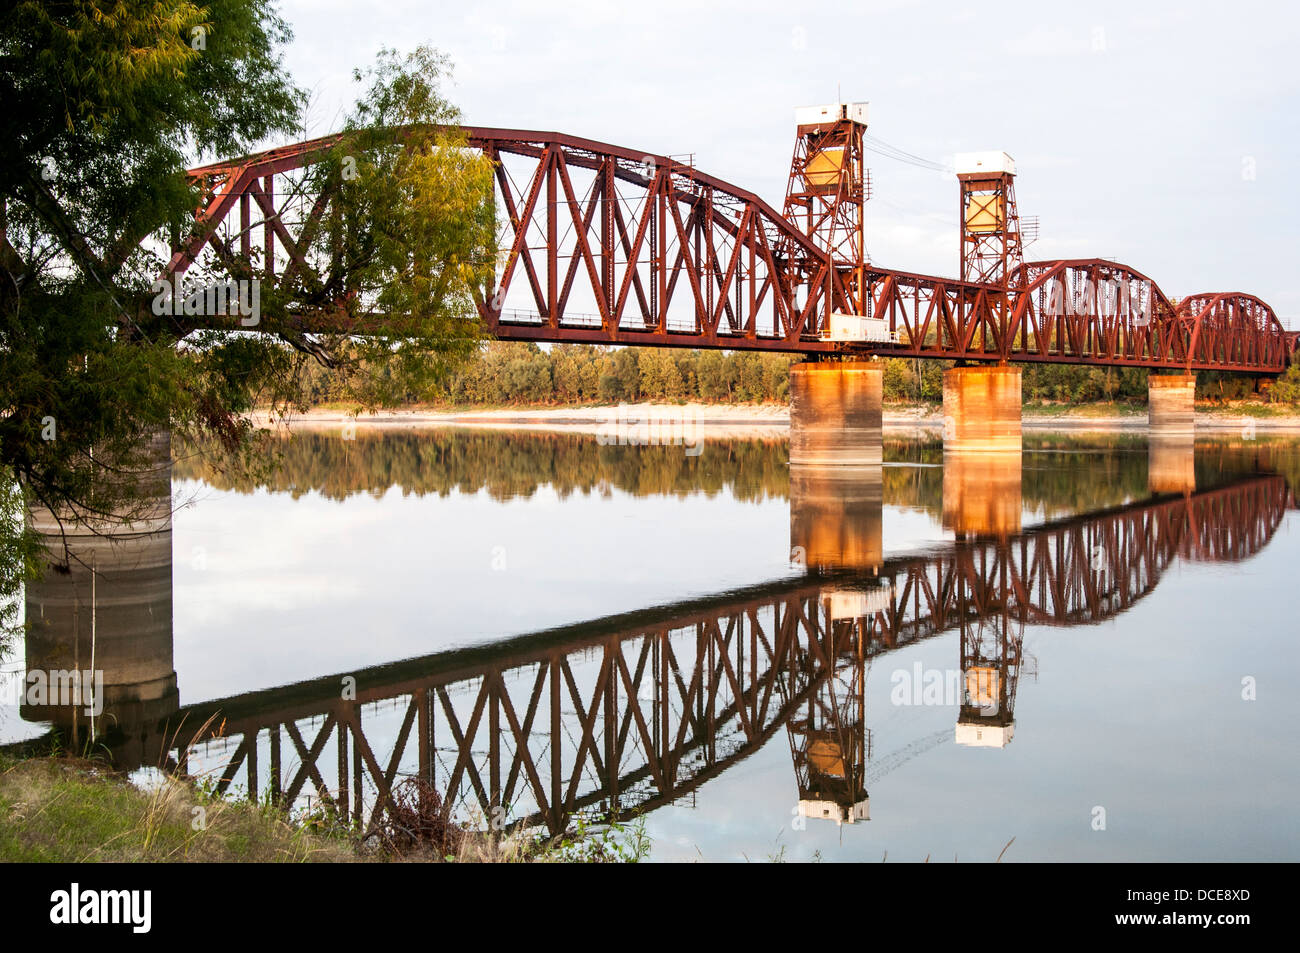 USA, Louisiana, Melville, Atchafalaya Basin, Railroad Bridge crossing the Atchafalaya River with reflection, north of I-10. Stock Photo